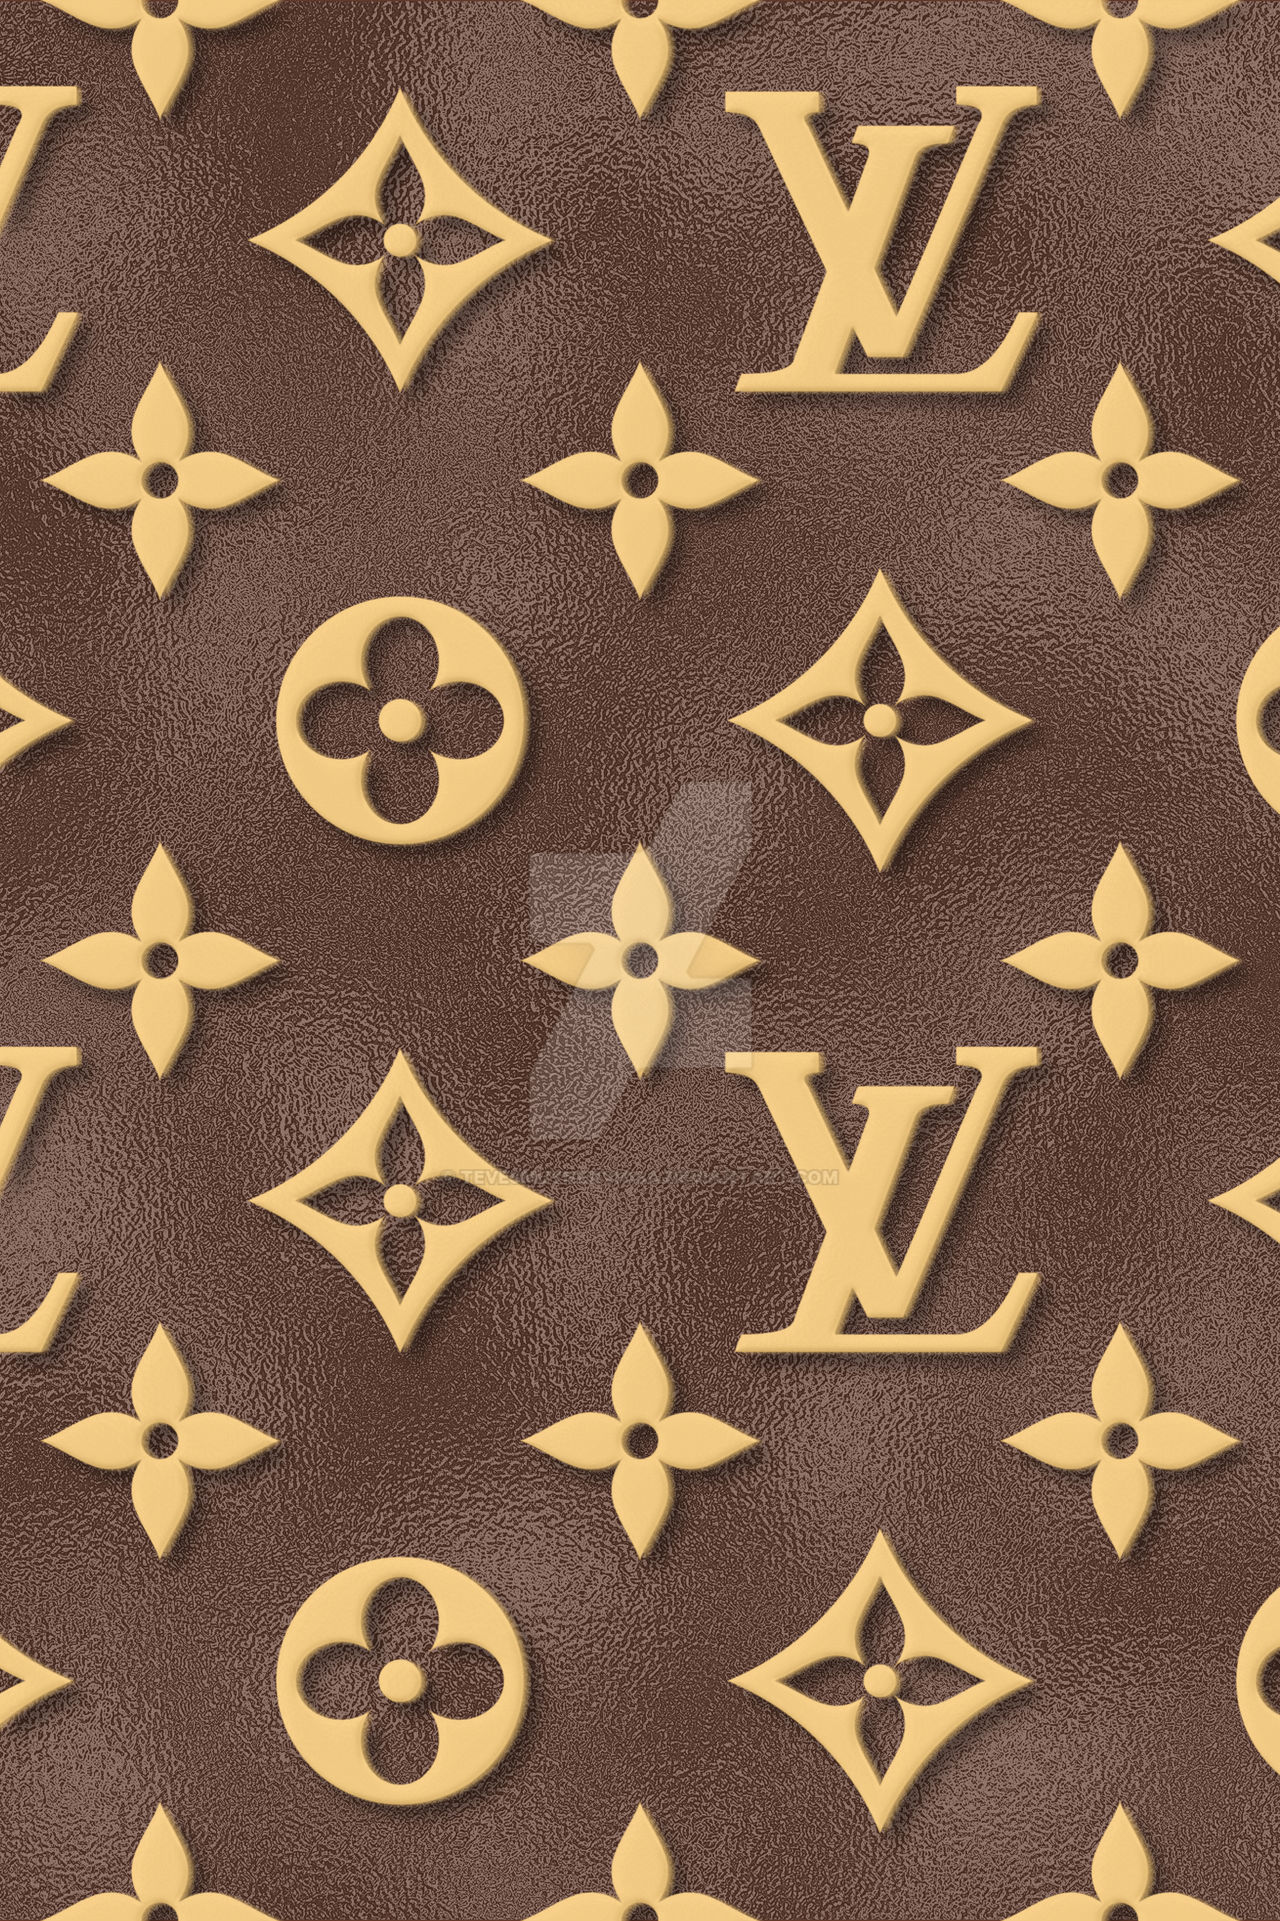 Gold Louis Vuitton Logo by TeVesMuyNerviosa on DeviantArt  Louis vuitton  pattern, Louis vuitton, Louis vuitton background